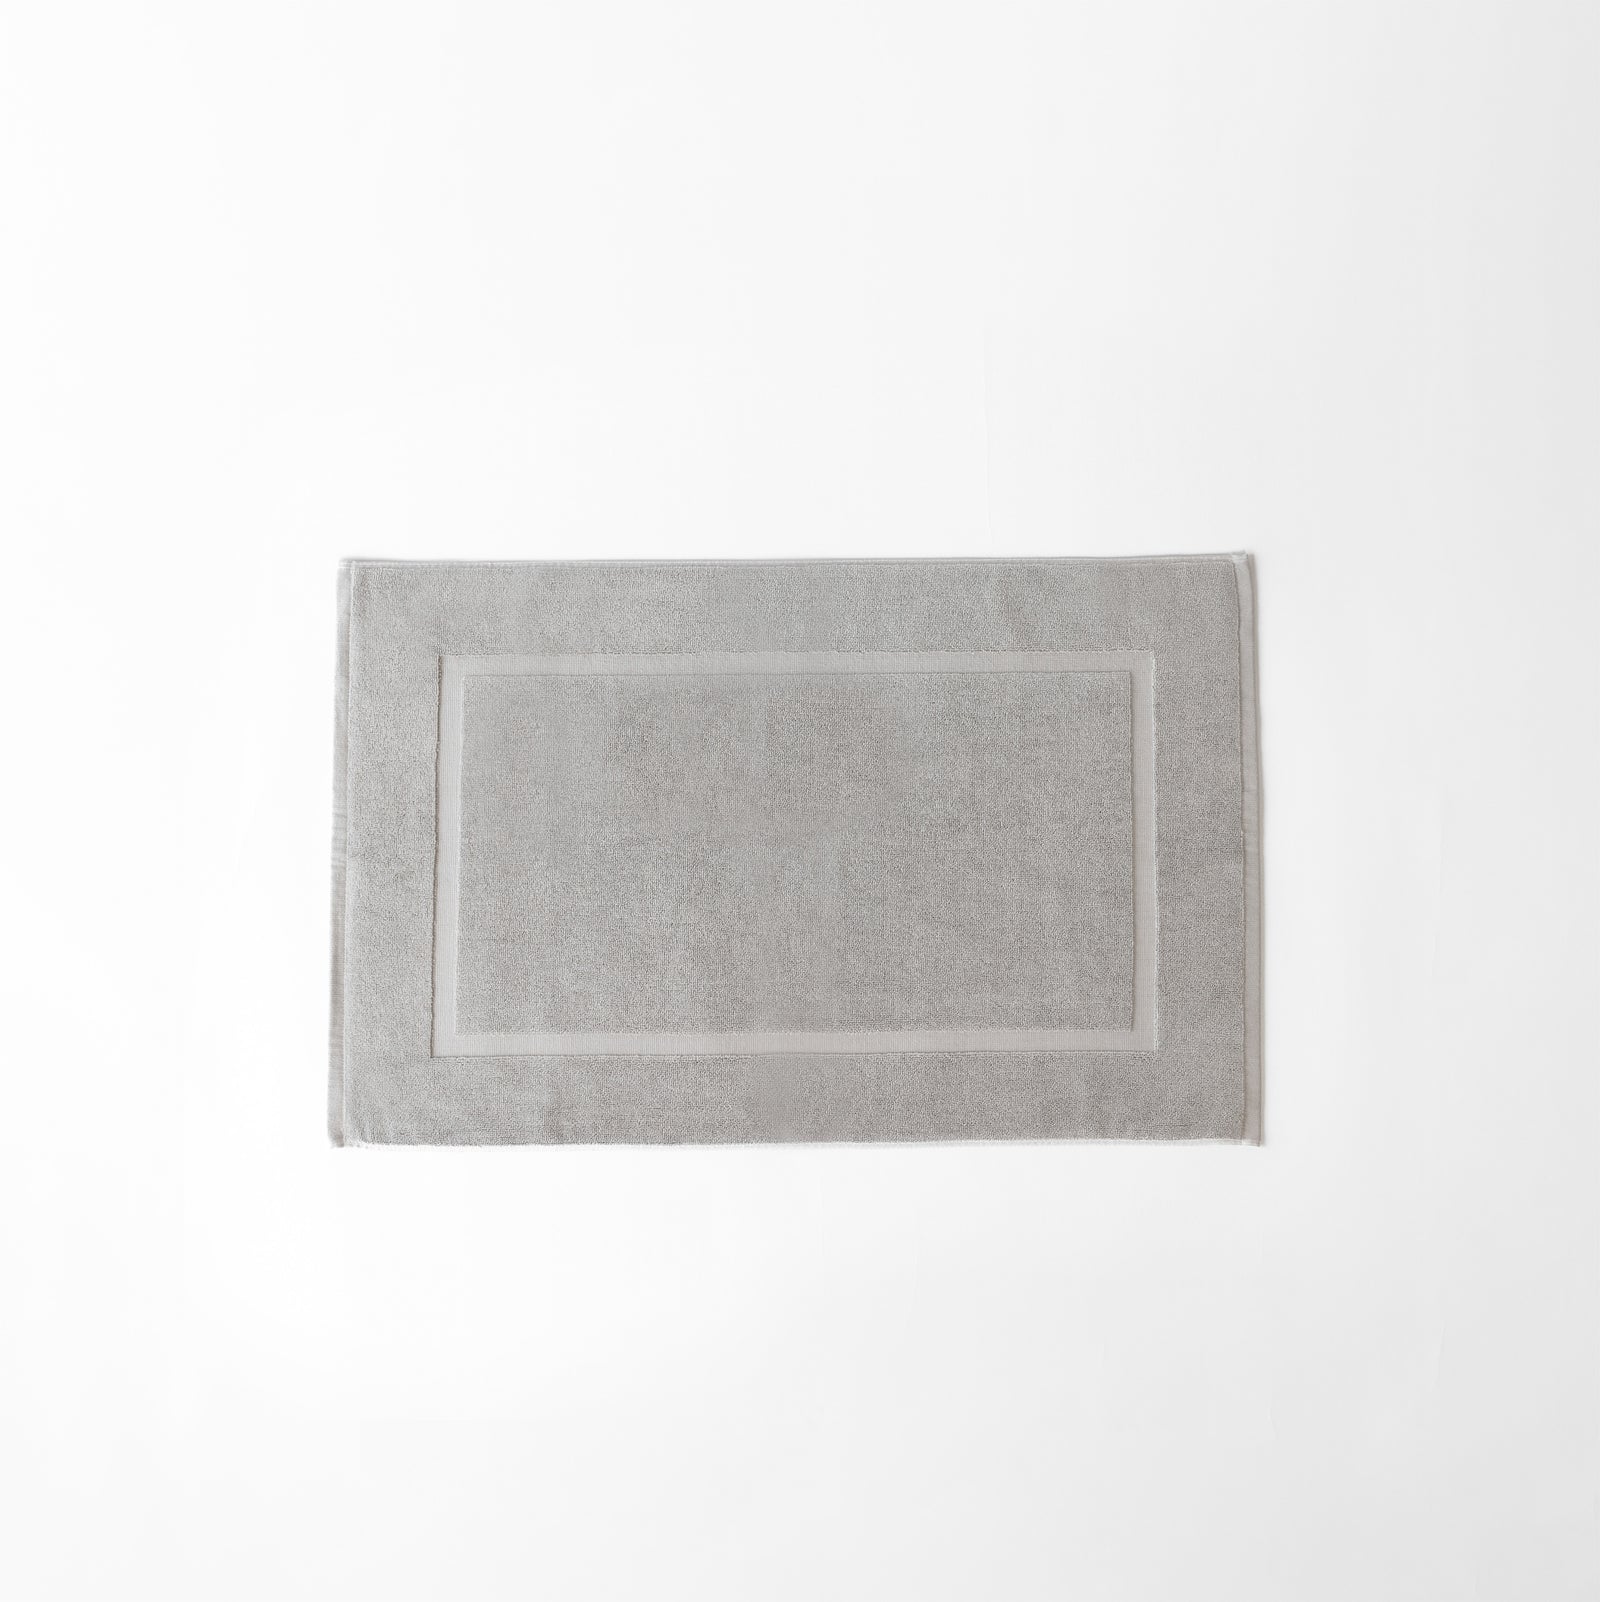 Light Grey Premium Plush Bath Mat resting on white background.